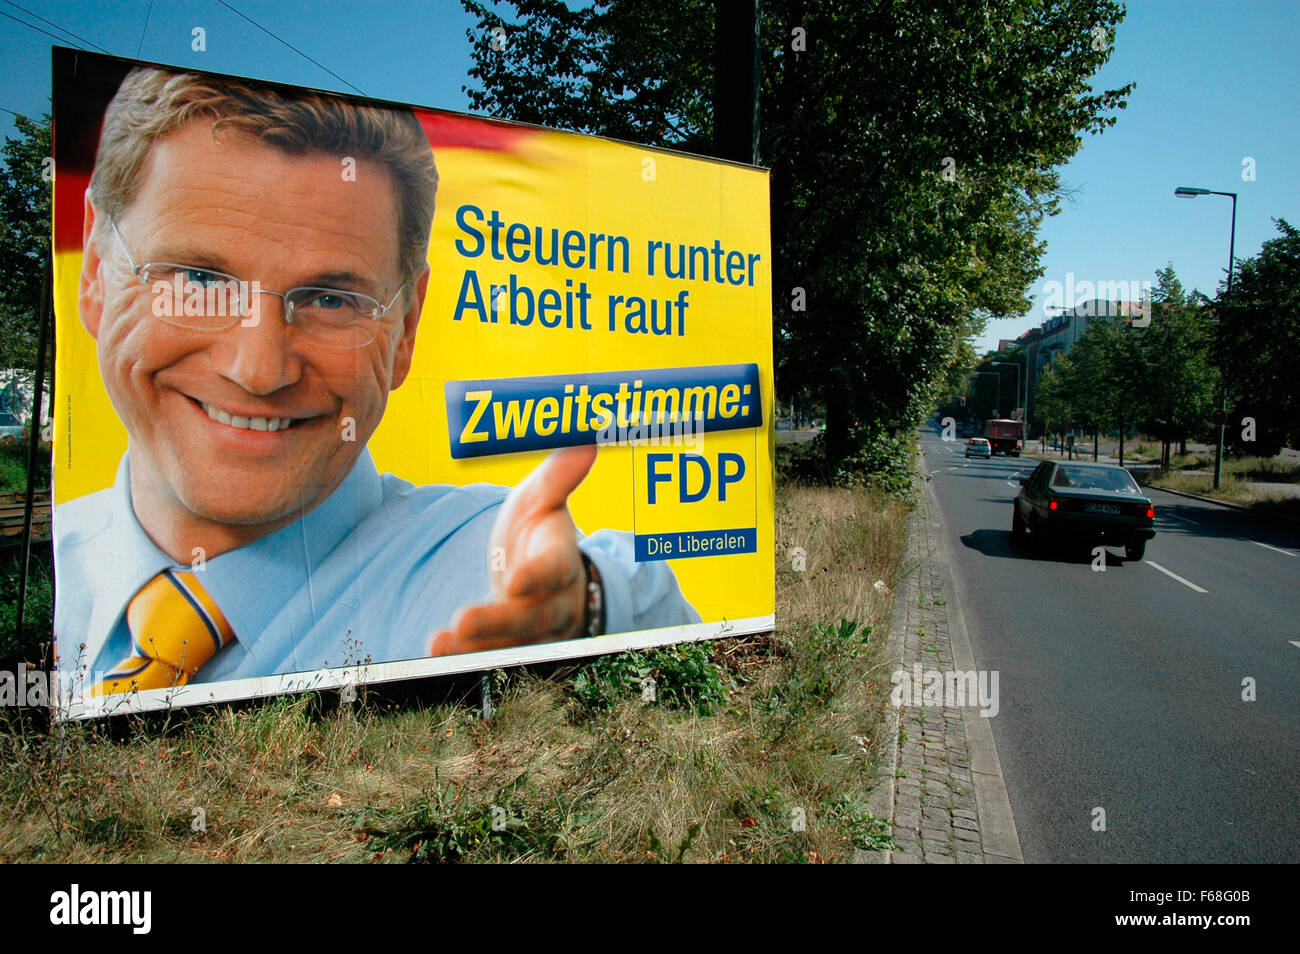 Guido Westerwelle, FDP - Wahlplakat, Wahlkampf zum Bundestag 2005, Bornholmer Strasse, Berlin-Premzlauer Berg:. Foto de stock